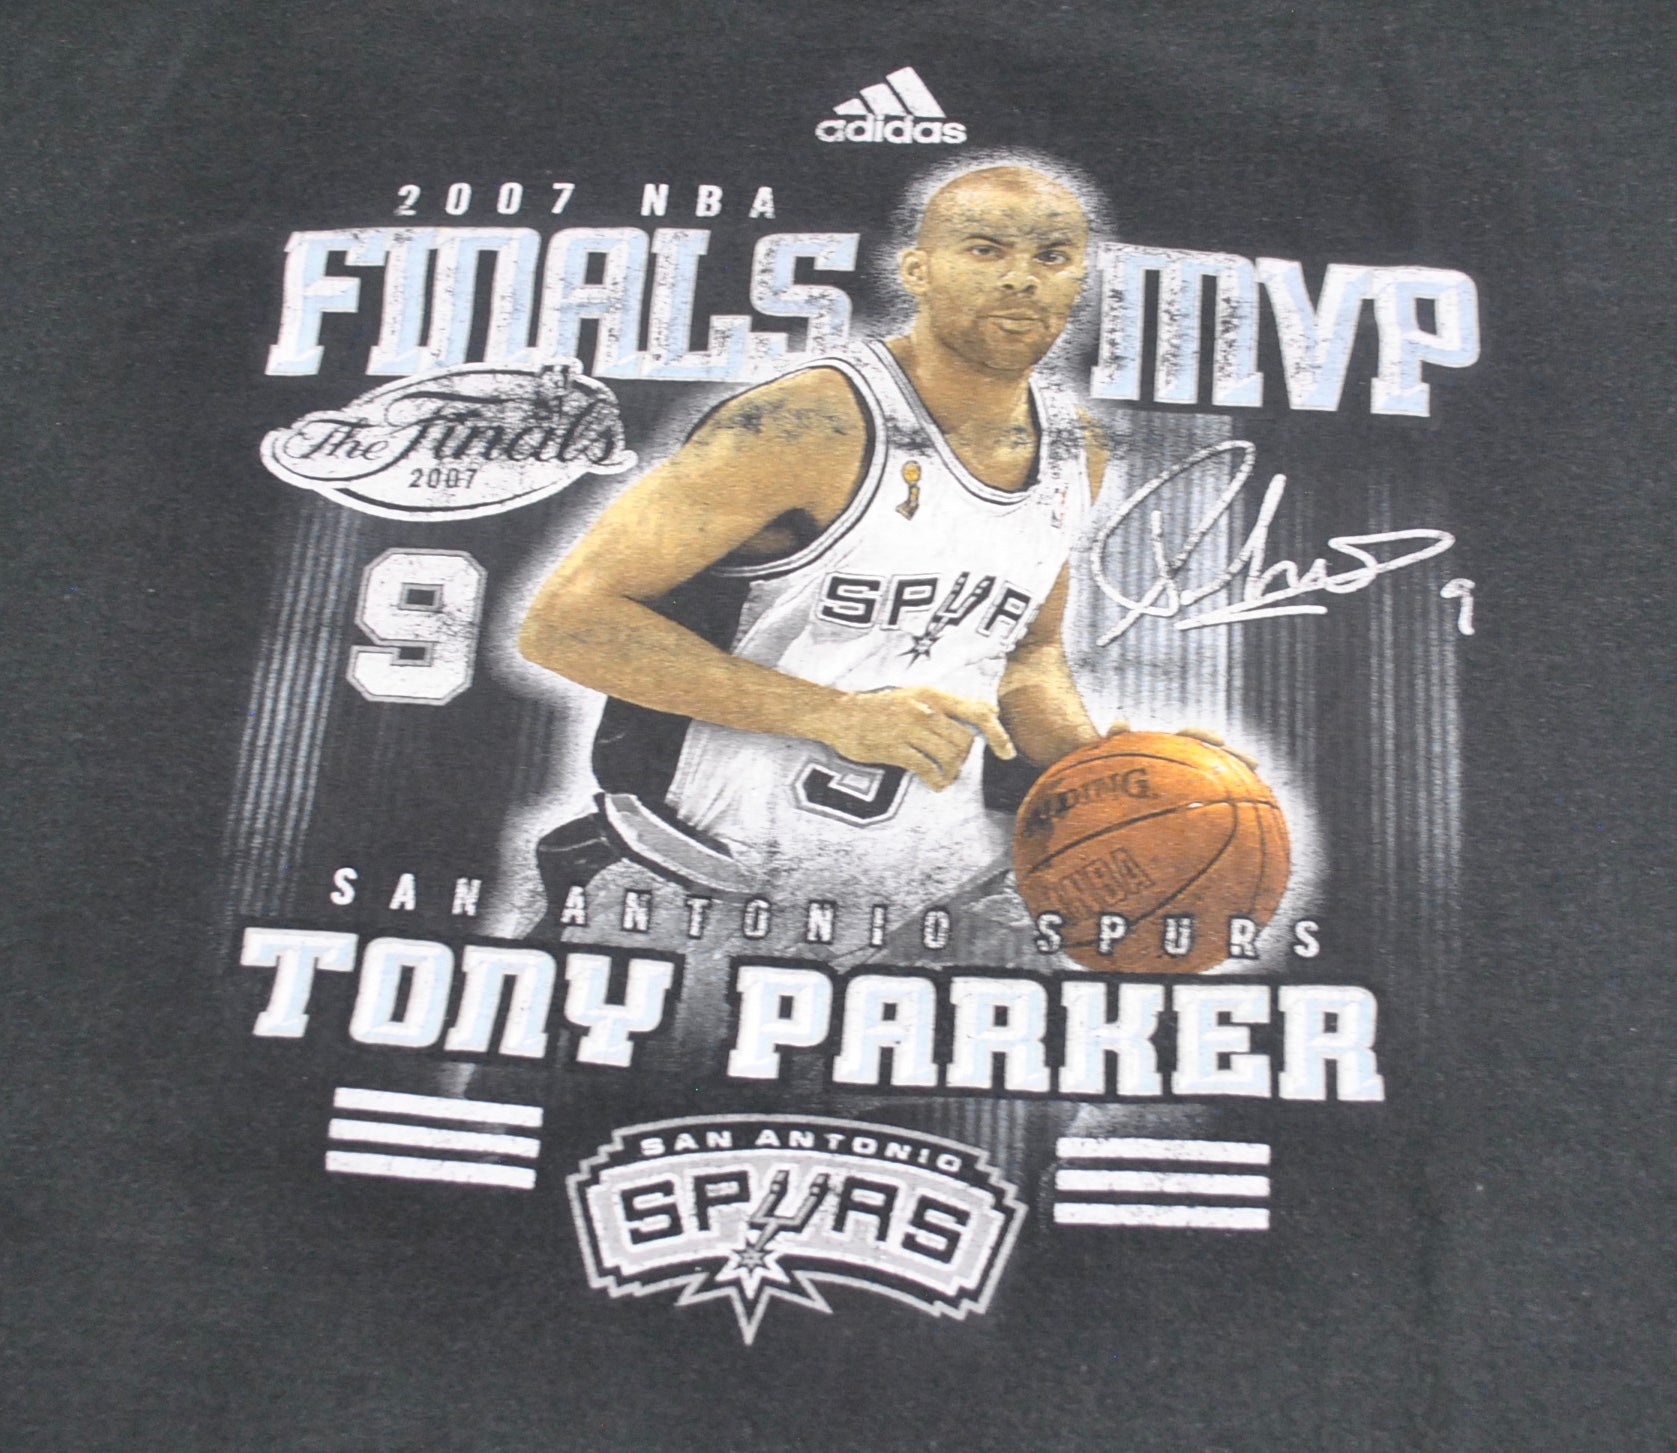 Tony Parker San Antonio Spurs Jersey